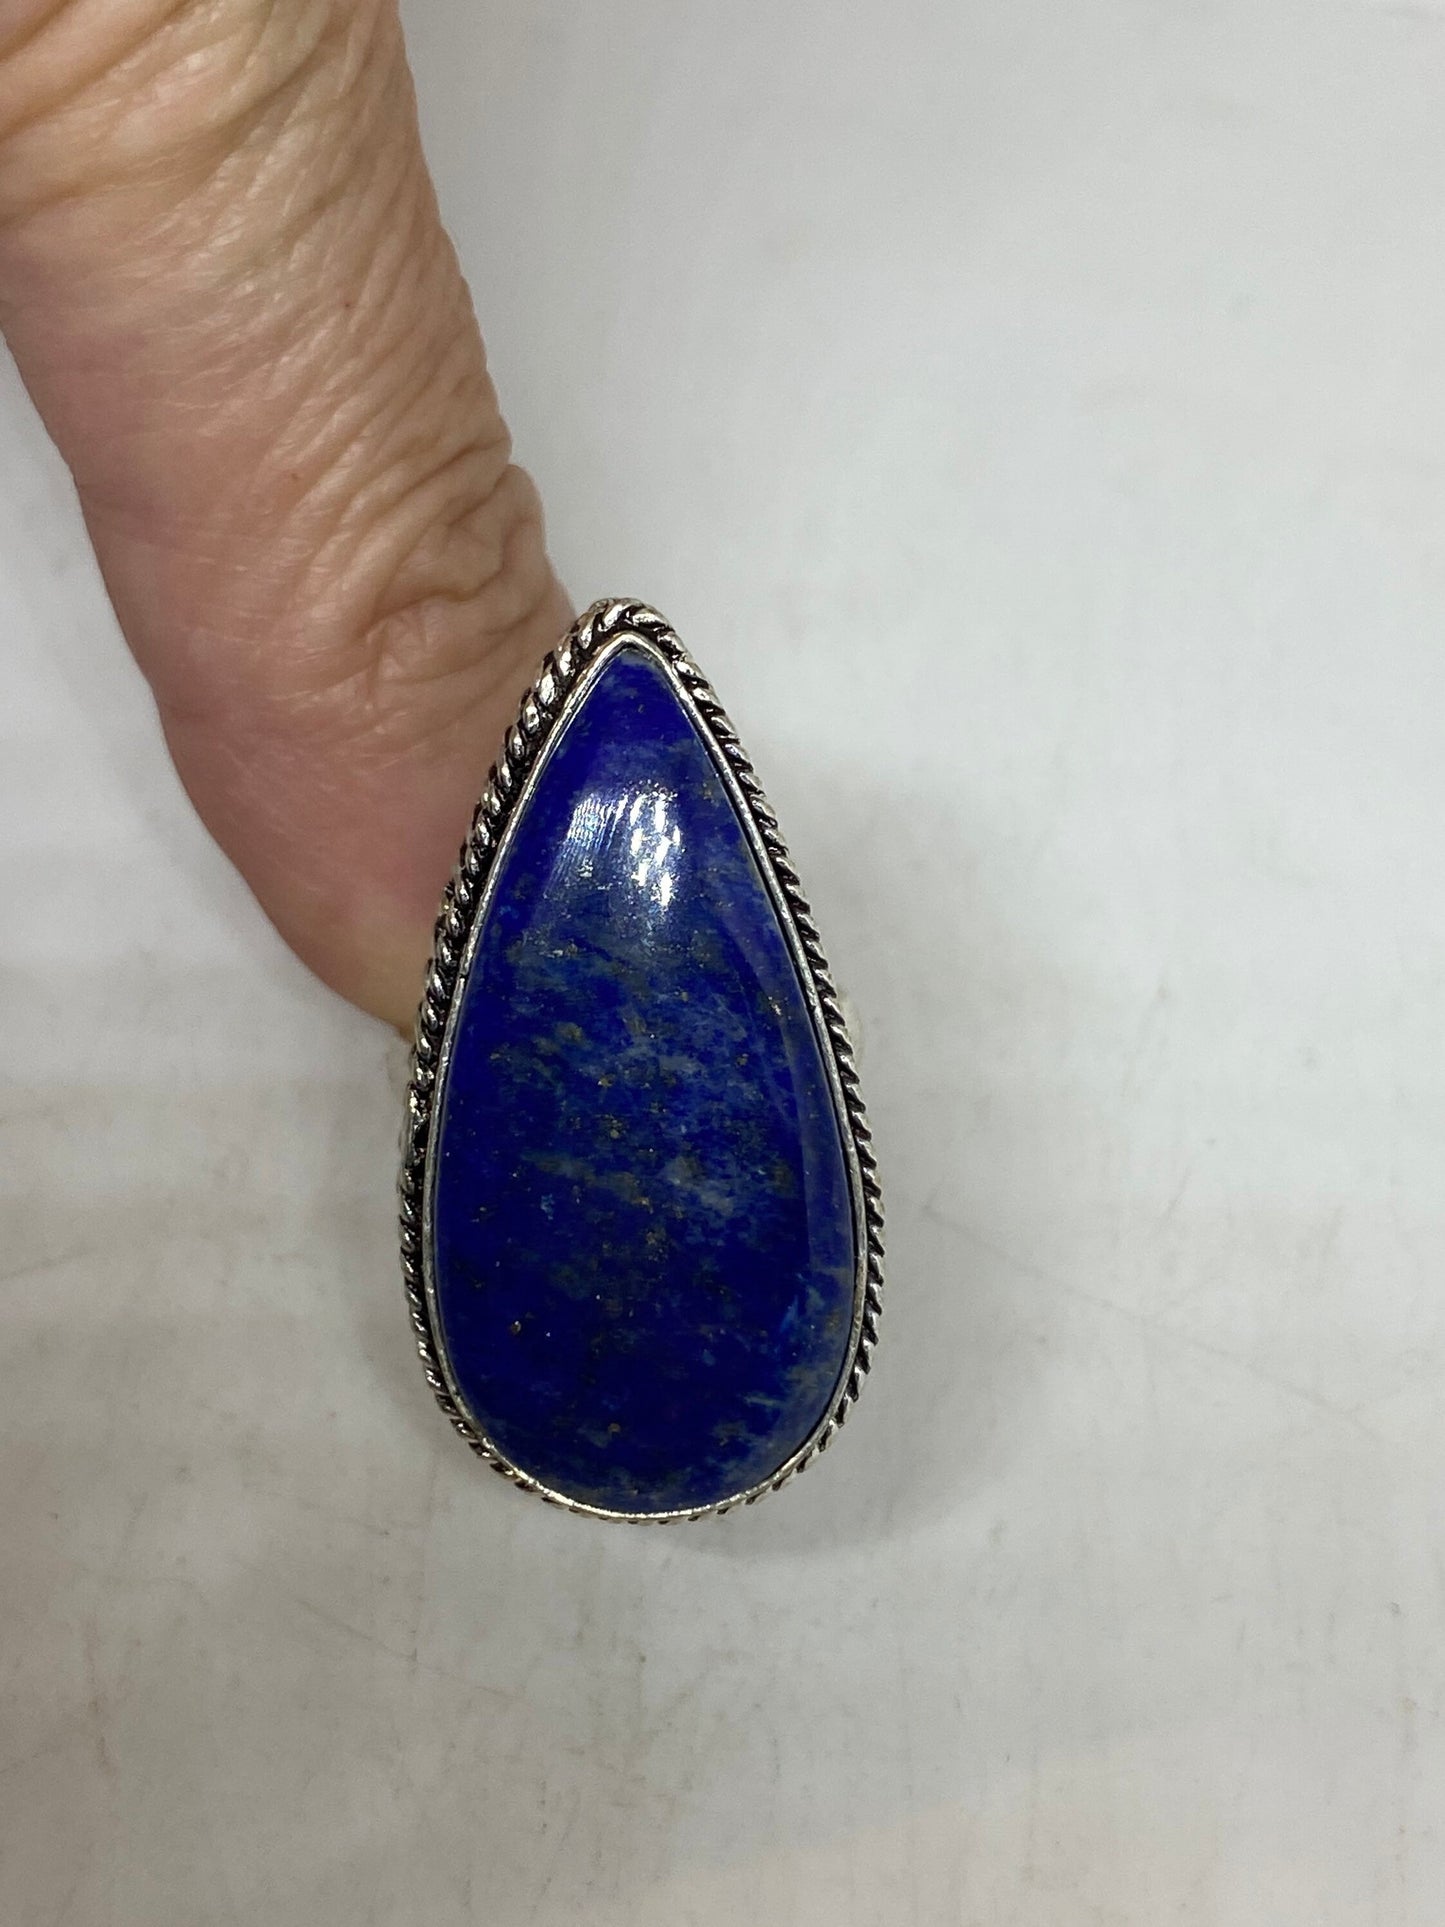 Vintage Blue Genuine Lapis Lazuli Ring Size 7